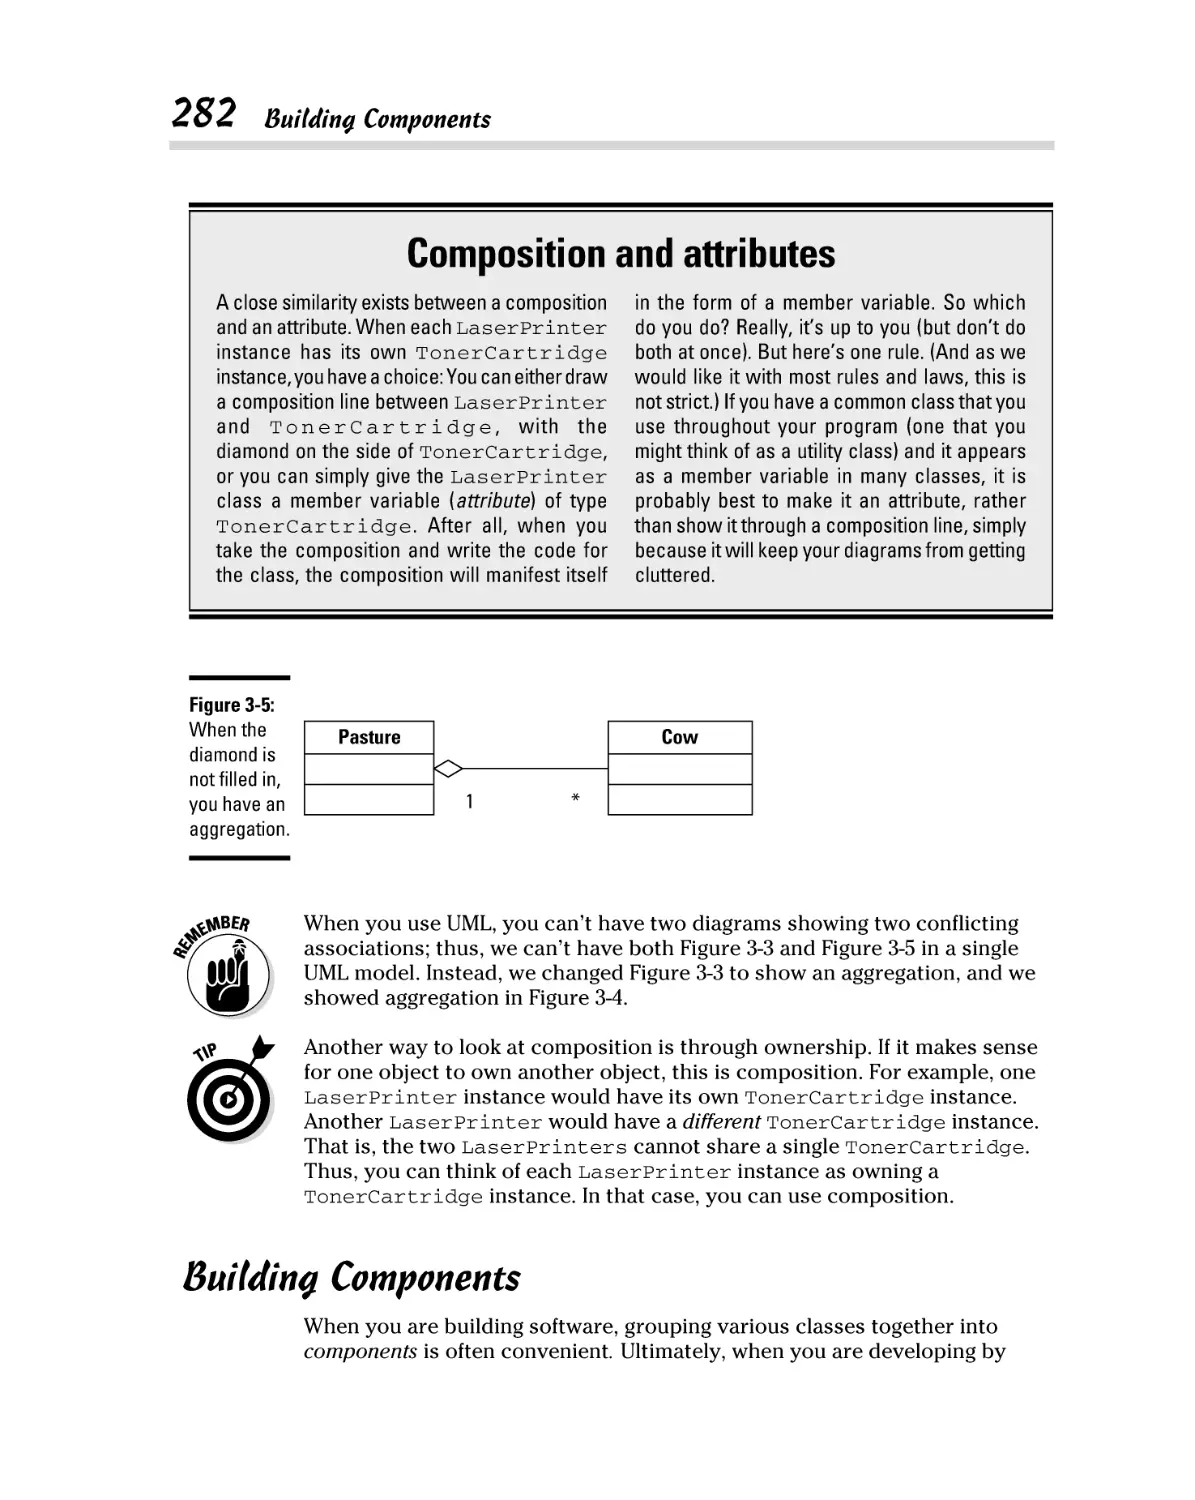 Building Components